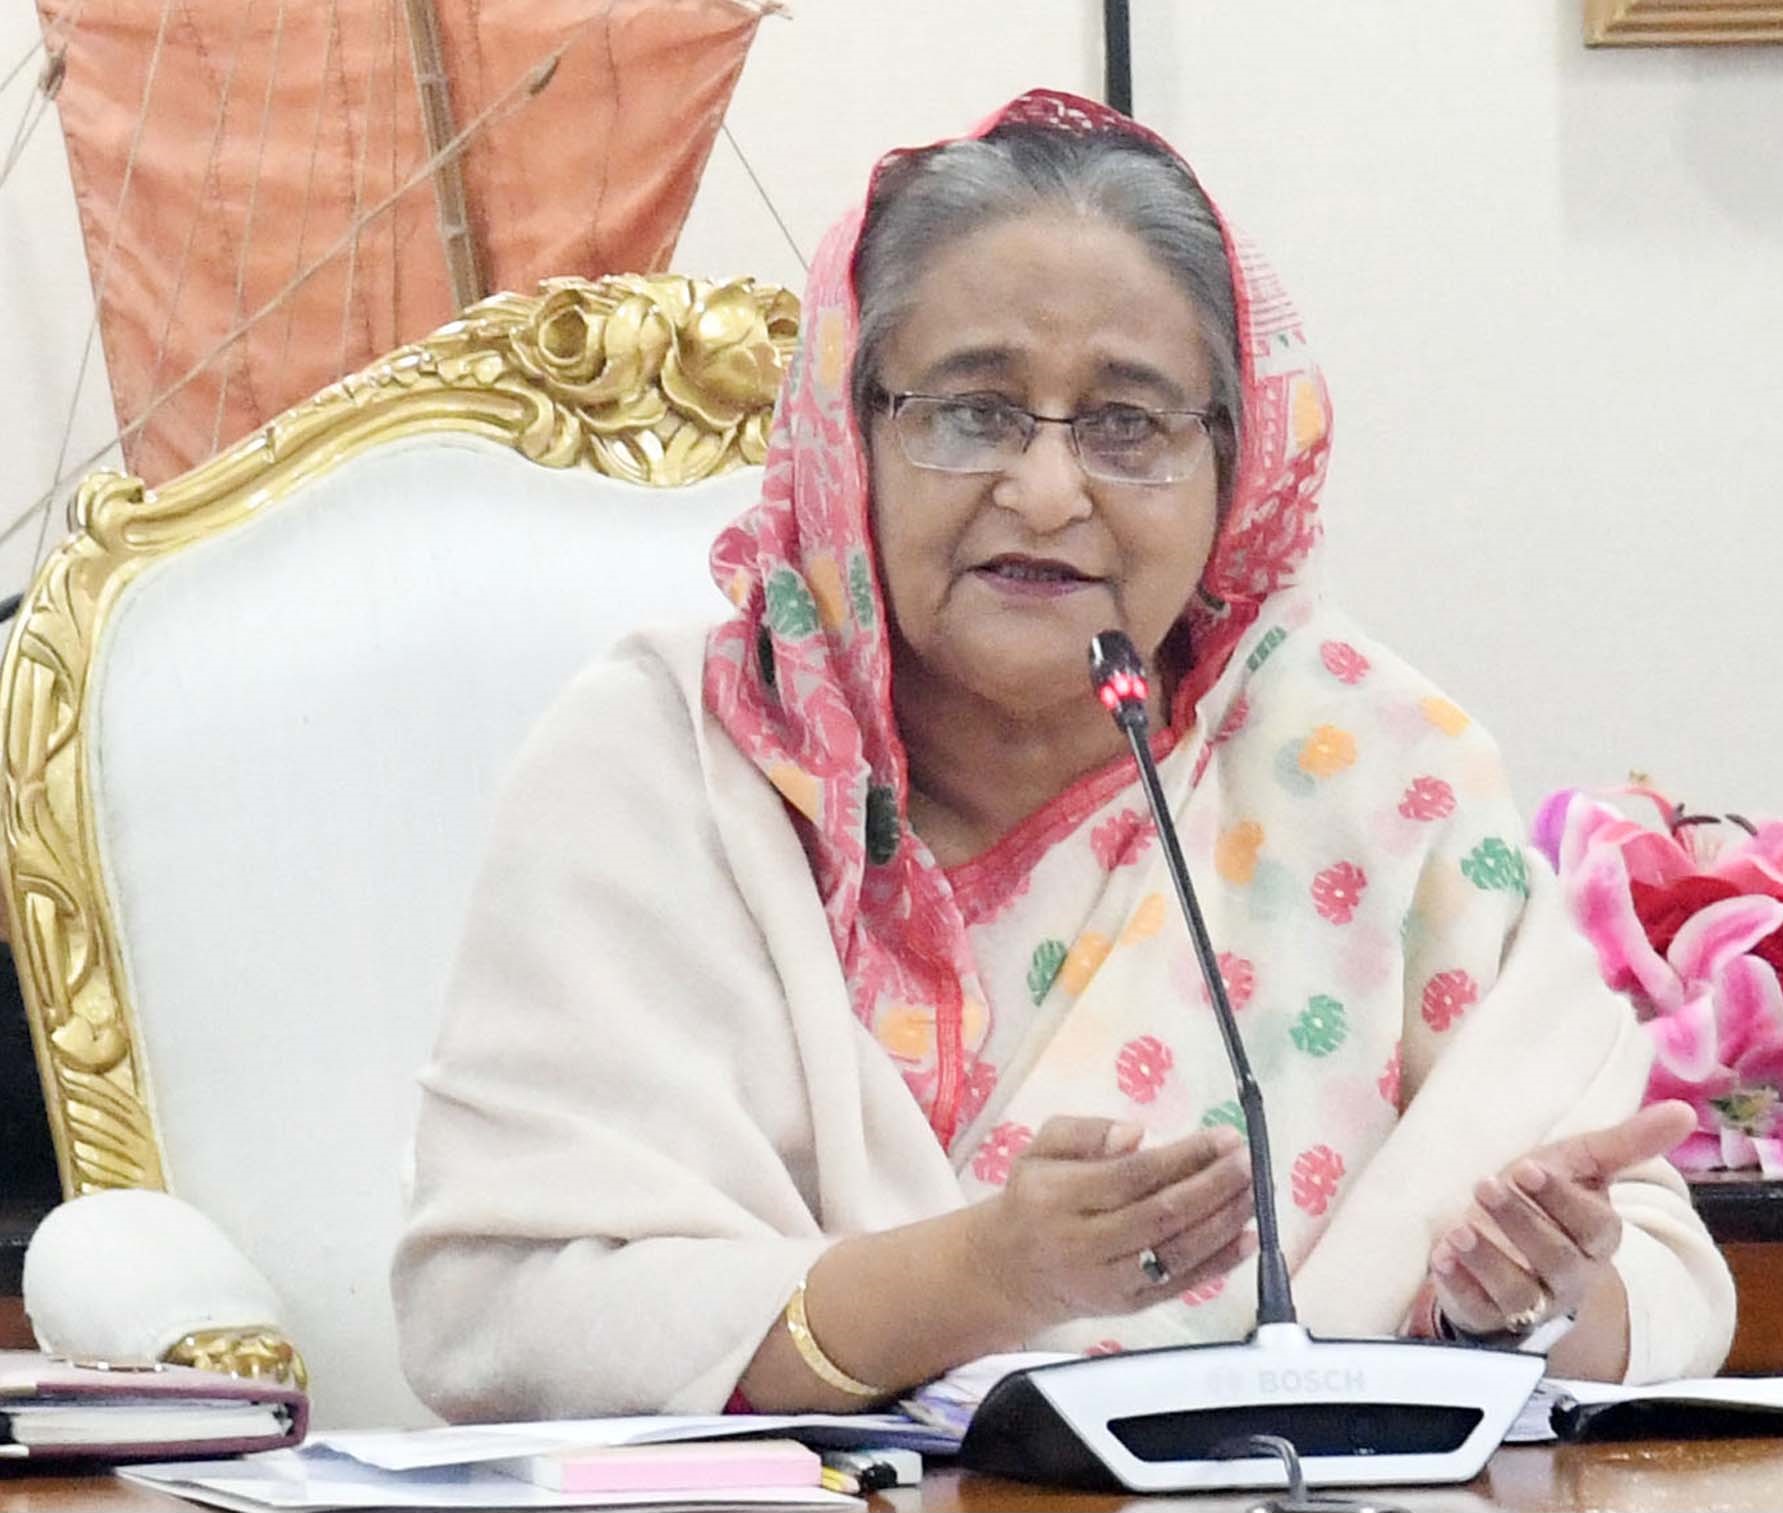 Sheikh Hasina questions India's CAA